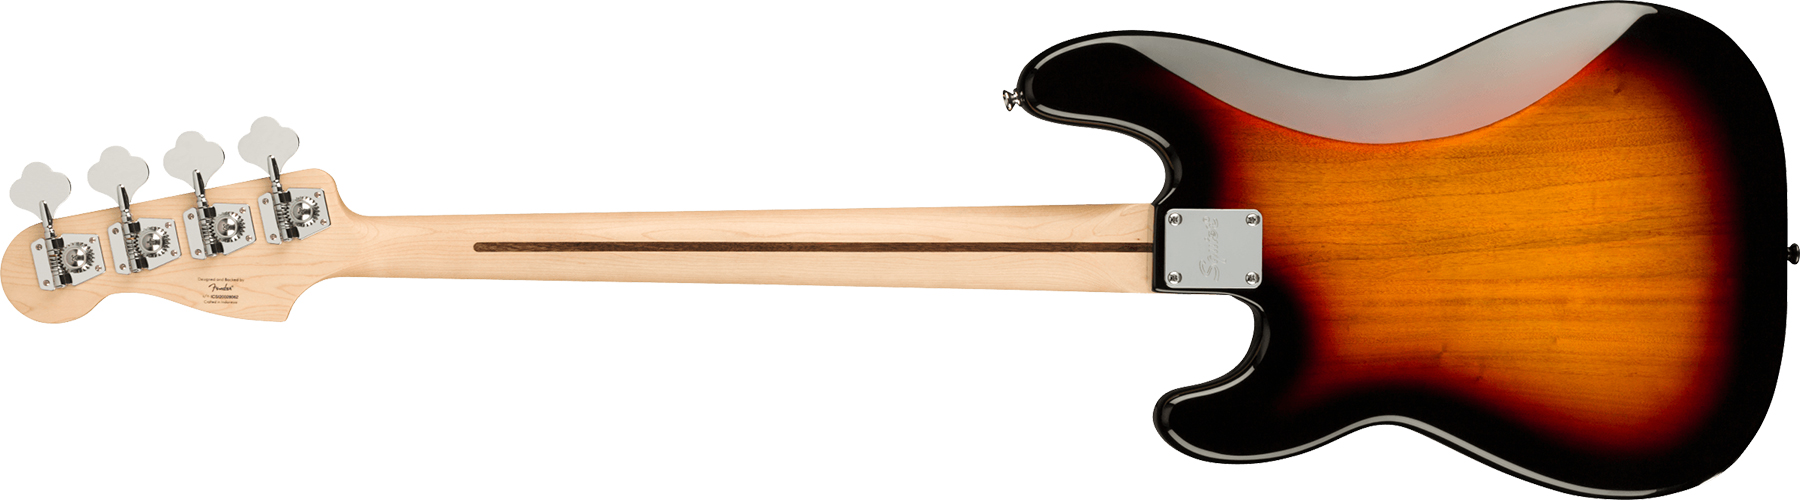 Squier Precision Bass Pj Affinity Pack +fender Rumble 15 V3 2021 Lau - 3-color Sunburst - E-Bass Set - Variation 2